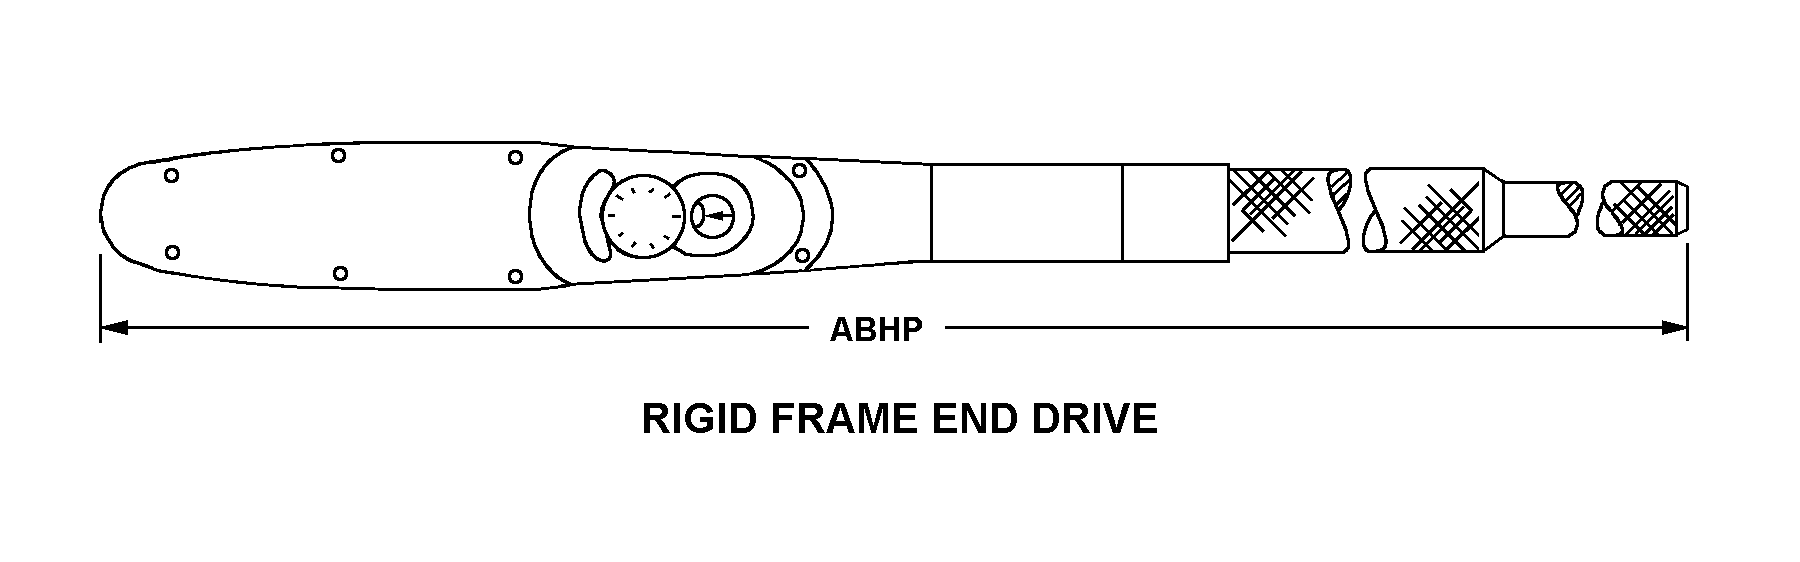 RIGID FRAME END DRIVE style nsn 5120-01-394-4280